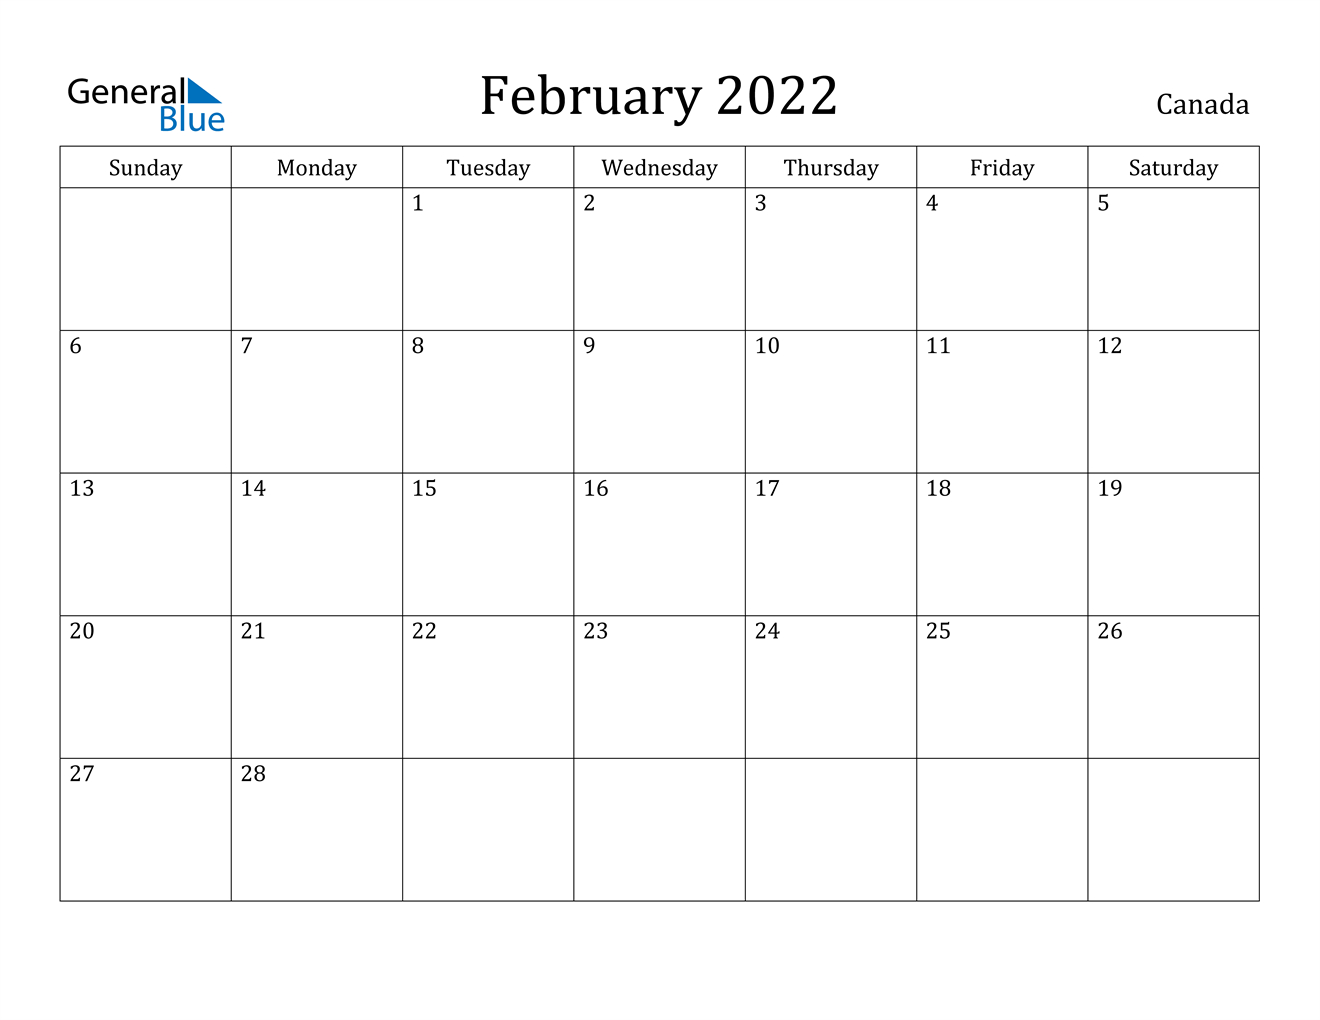 February 2022 Calendar - Canada